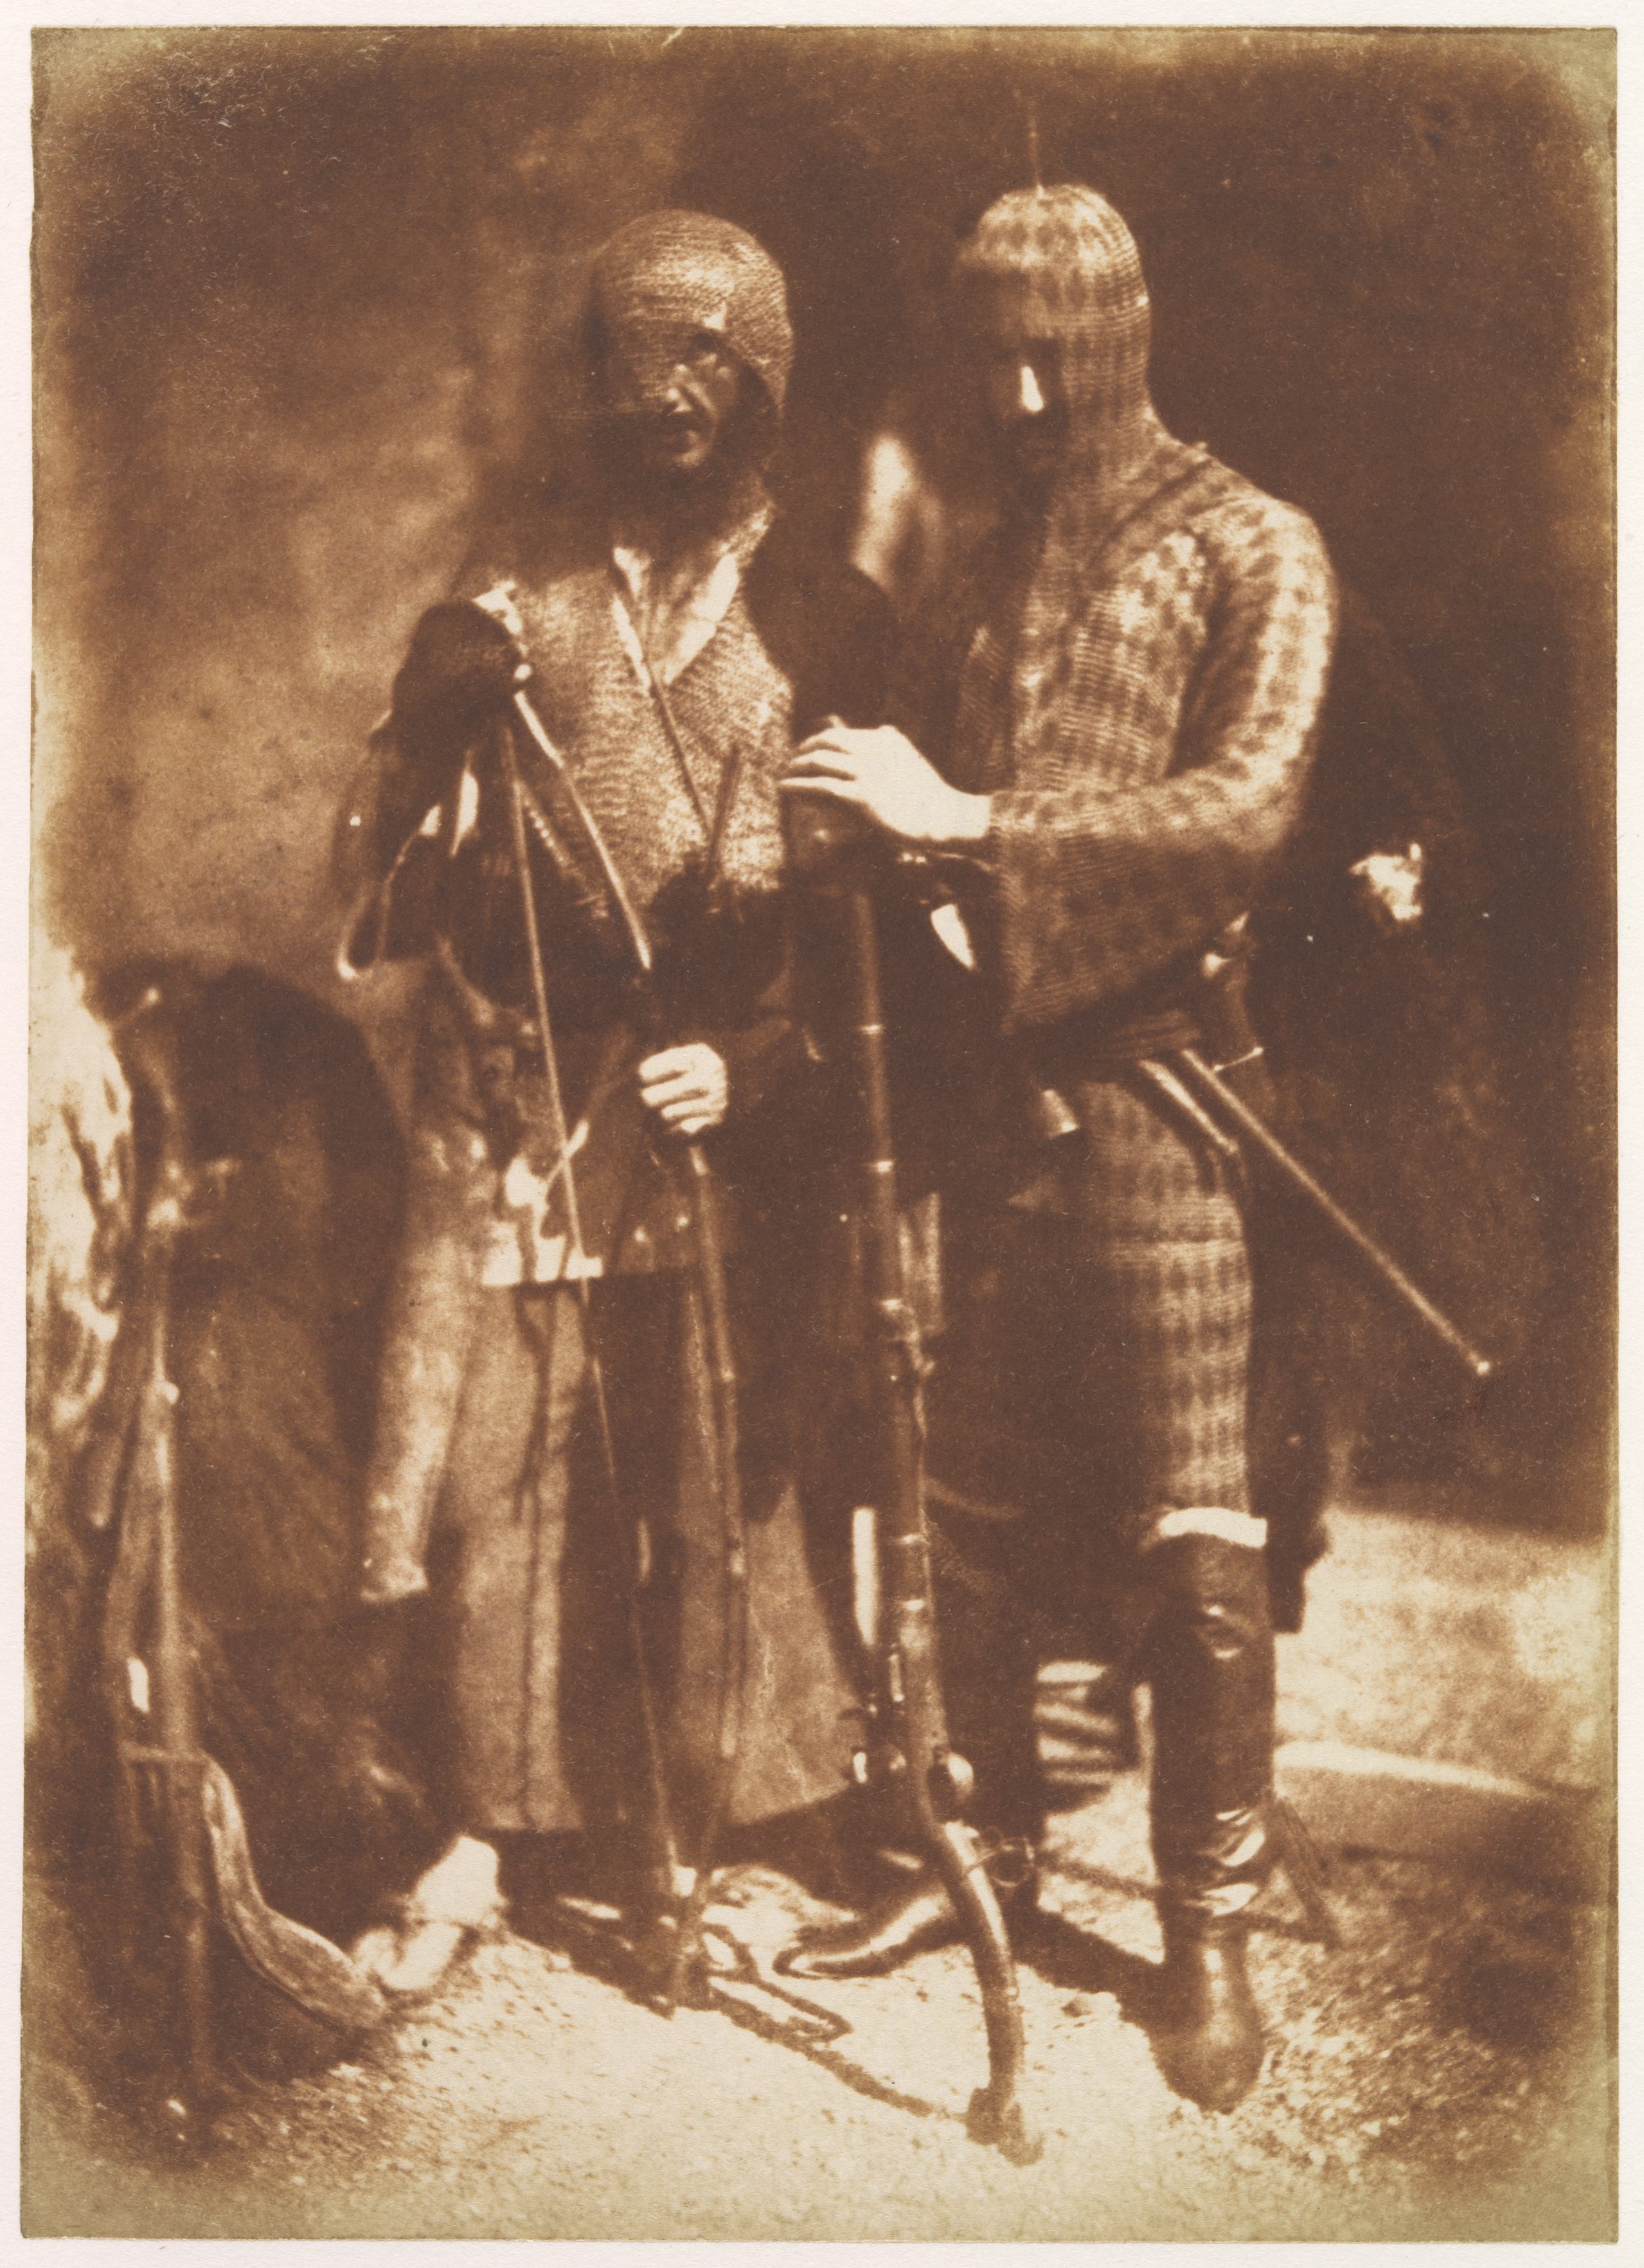 Афганцы в доспехах, 1843. Авторы художник Дэвид Октавиус Хилл и химик Роберт Адамсон